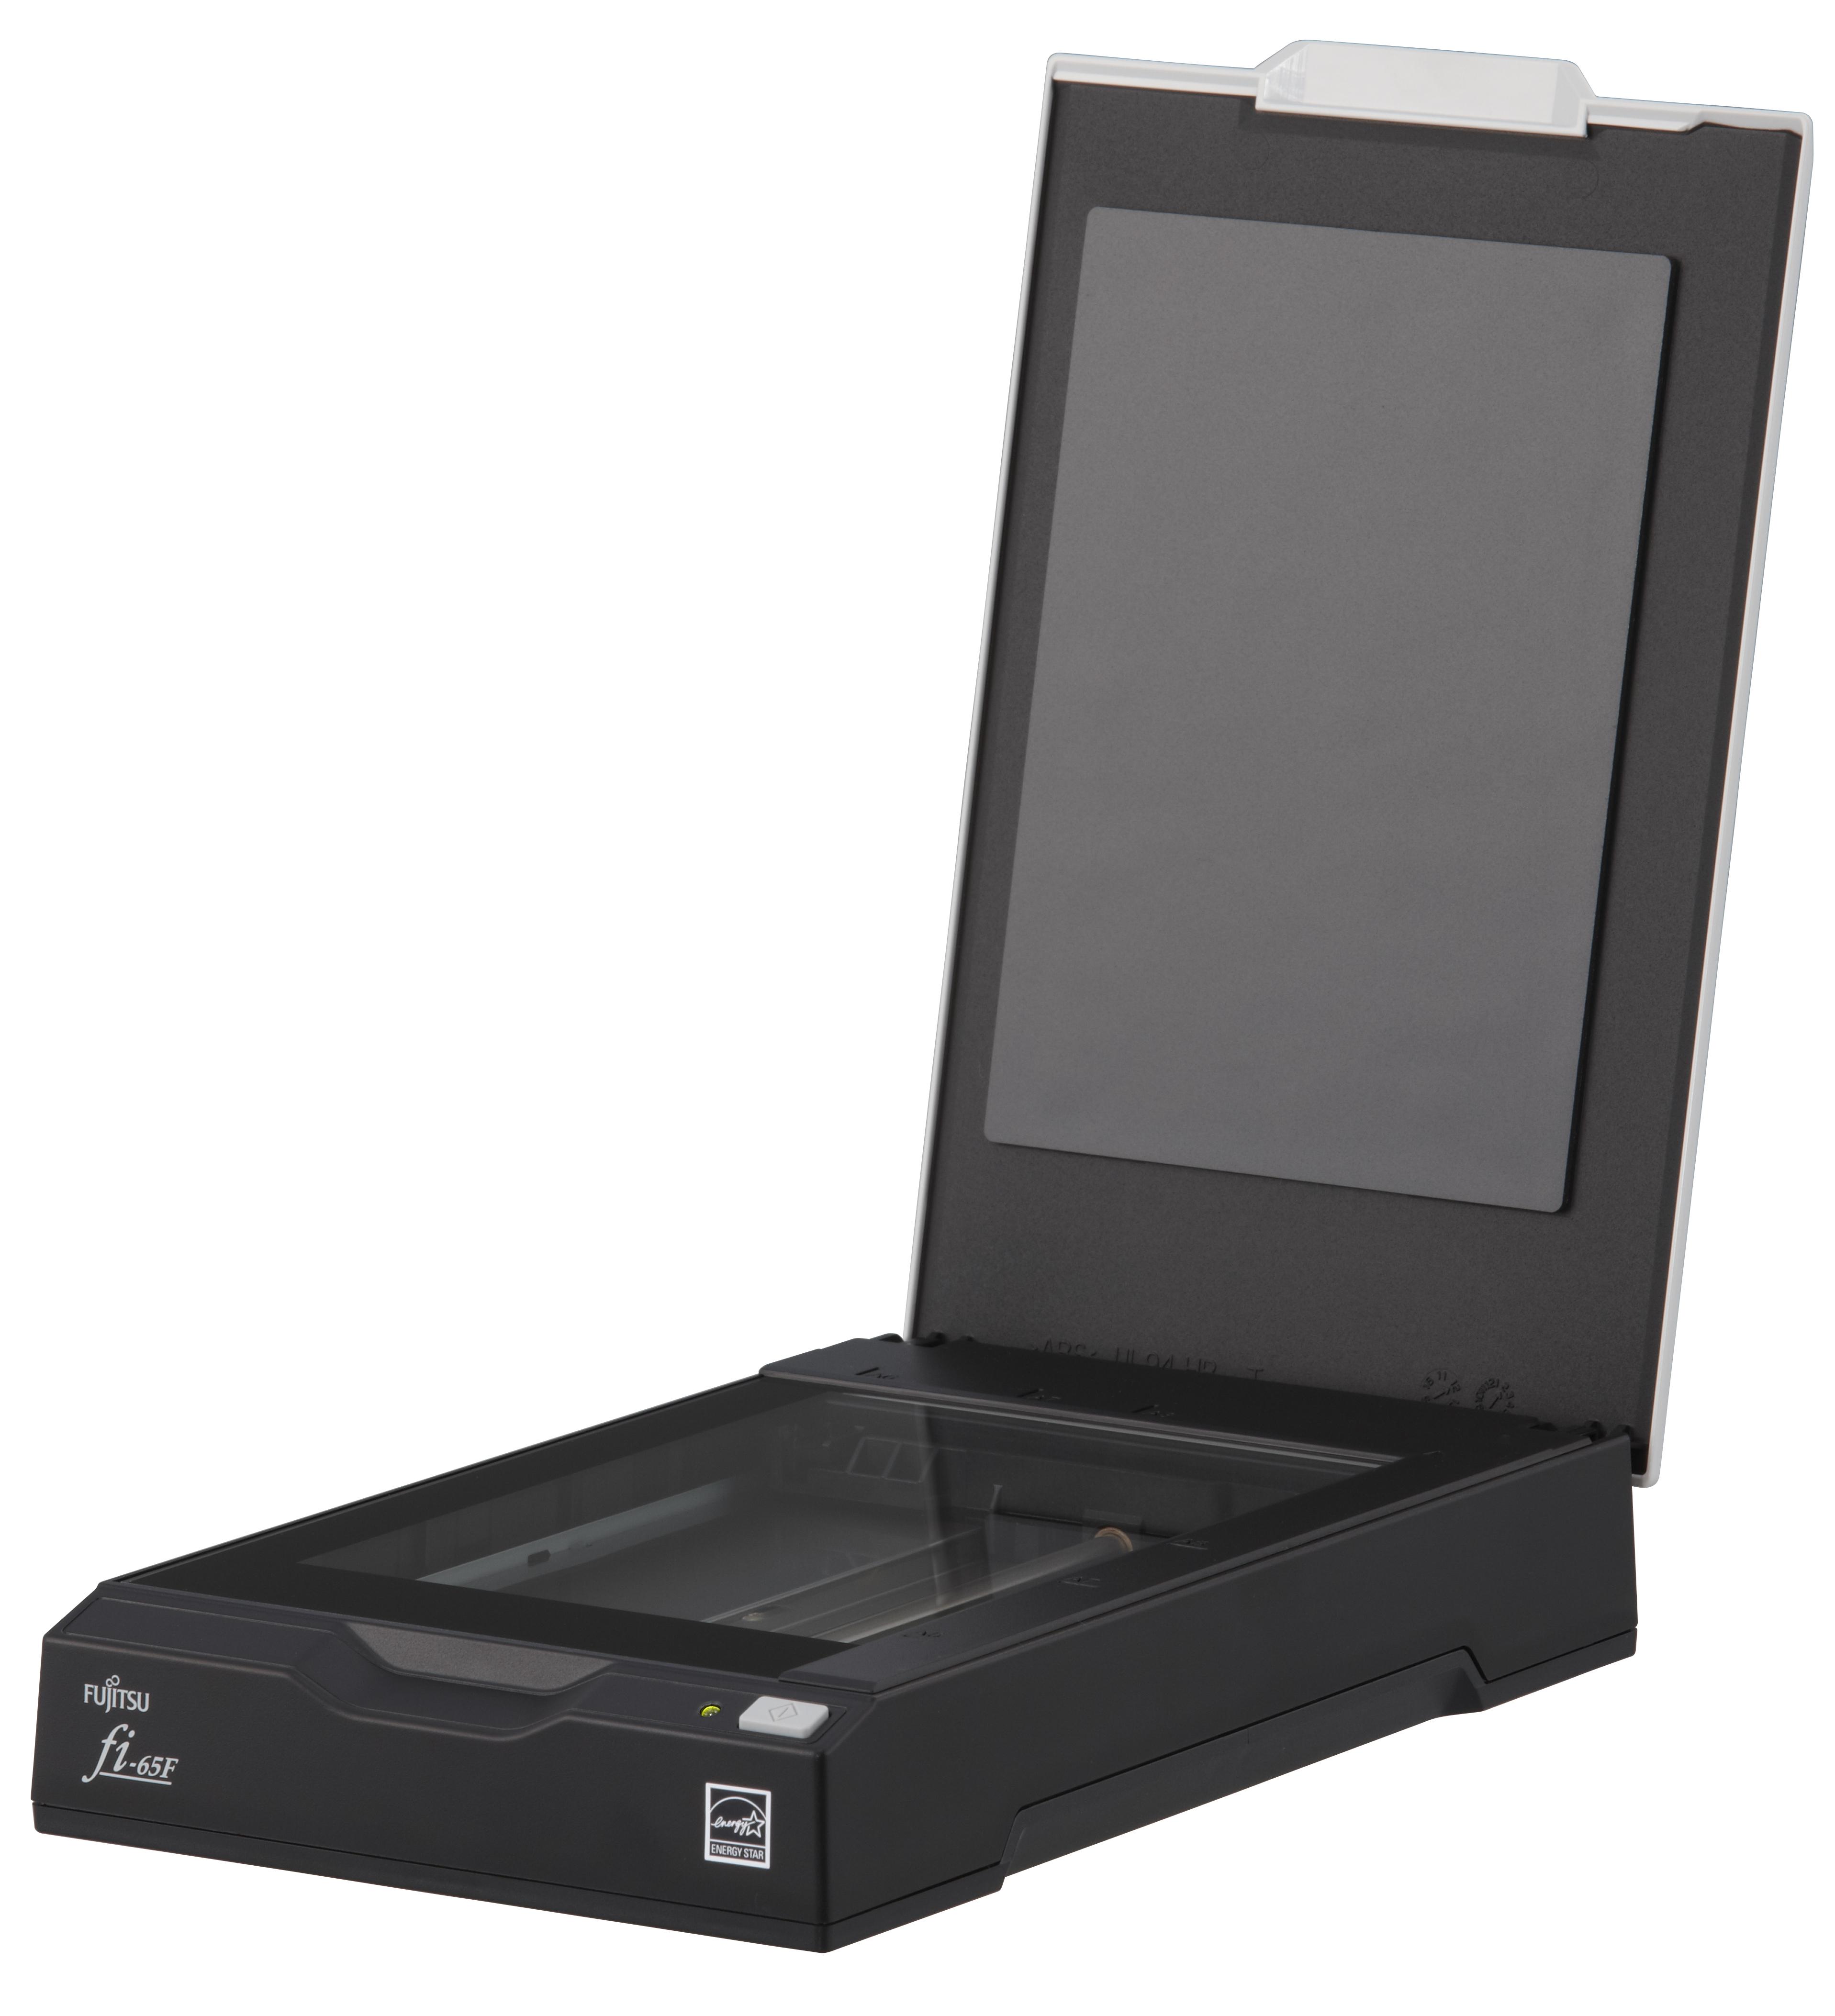 Сканер для документов на телефон андроид. Сканер Fujitsu Fi-65f. Сканер Microtek xt6060. Сканер Microtek xt6060 (6006). Планшетный сканер Fujitsu Fi-65f pa03595-b001 (a6, цветной, CIS).